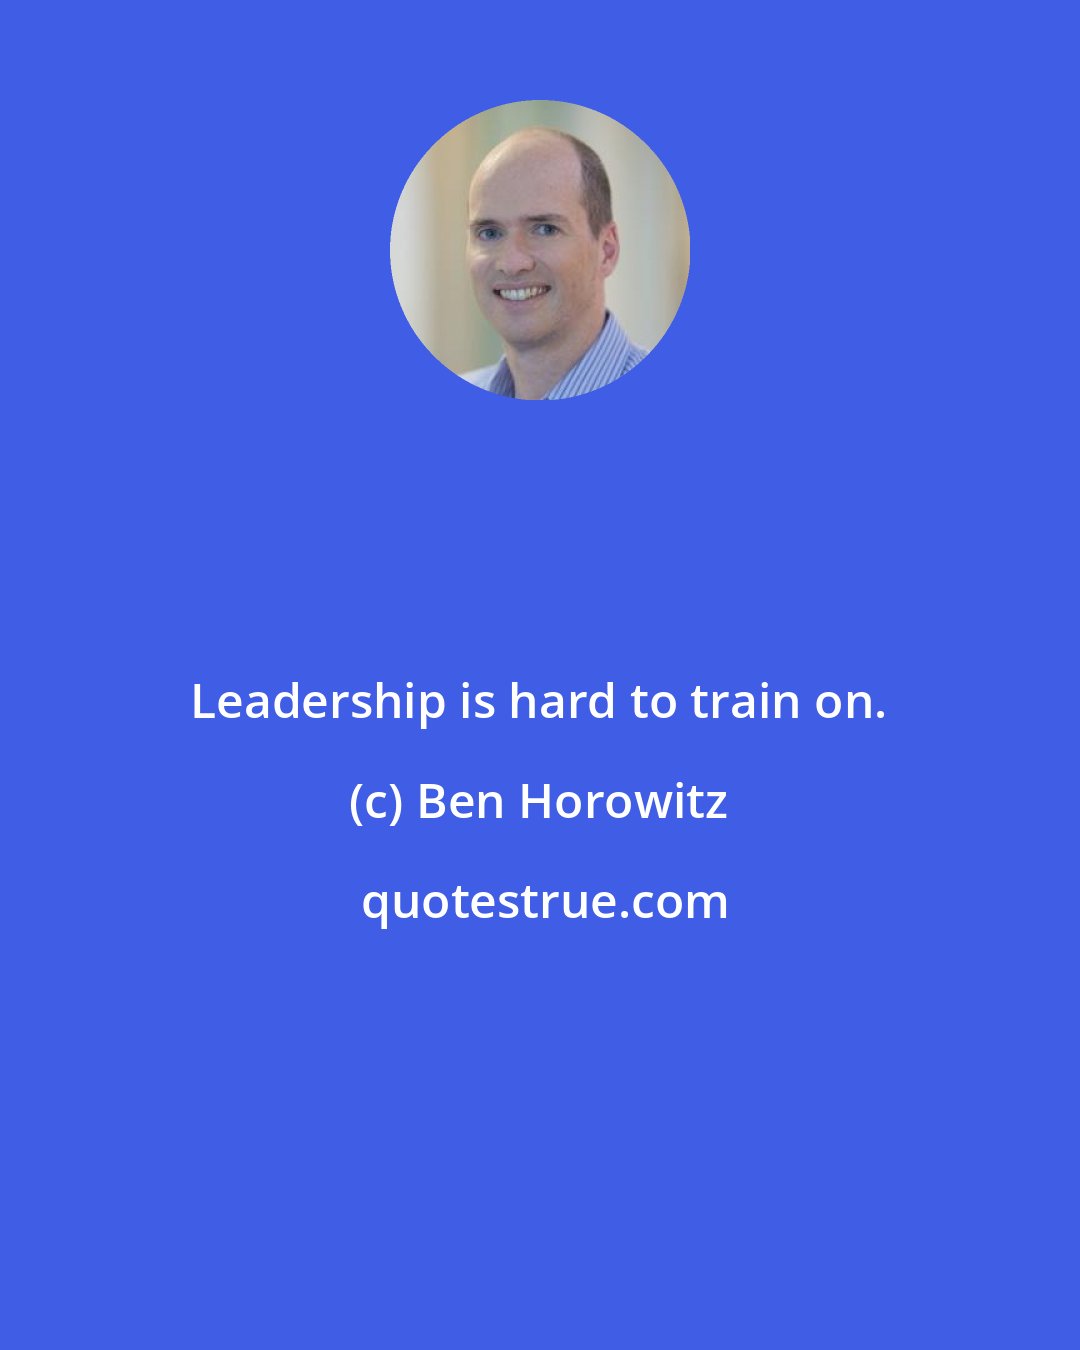 Ben Horowitz: Leadership is hard to train on.